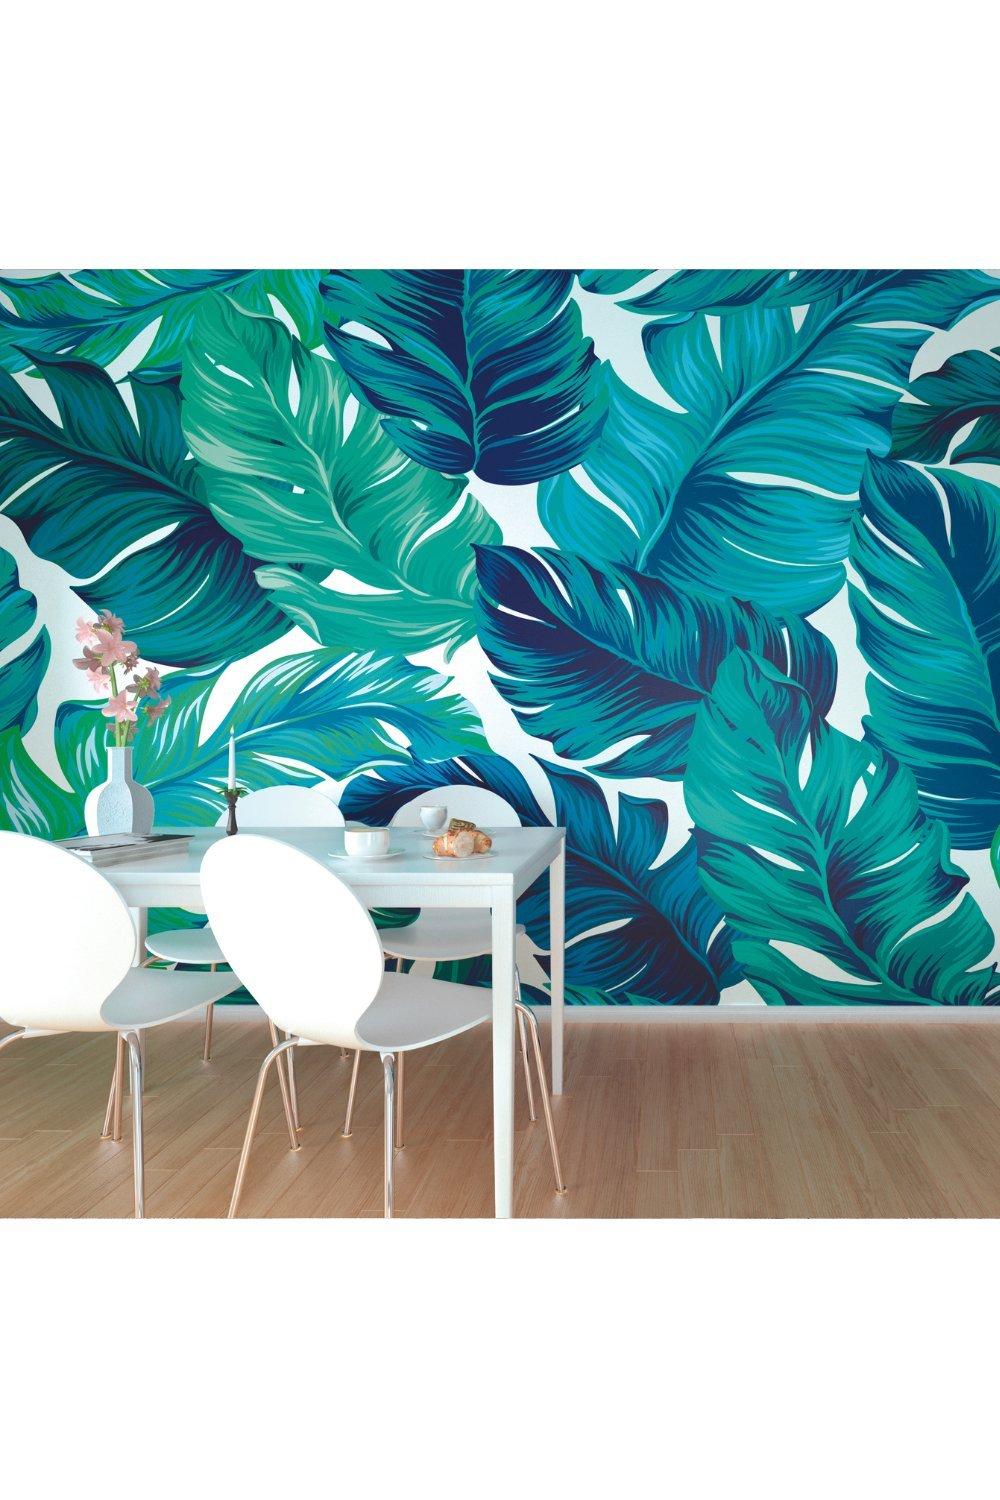 Bold Tropical Leaves Green Matt Smooth Paste the Wall Mural 350cm wide x 280cm high